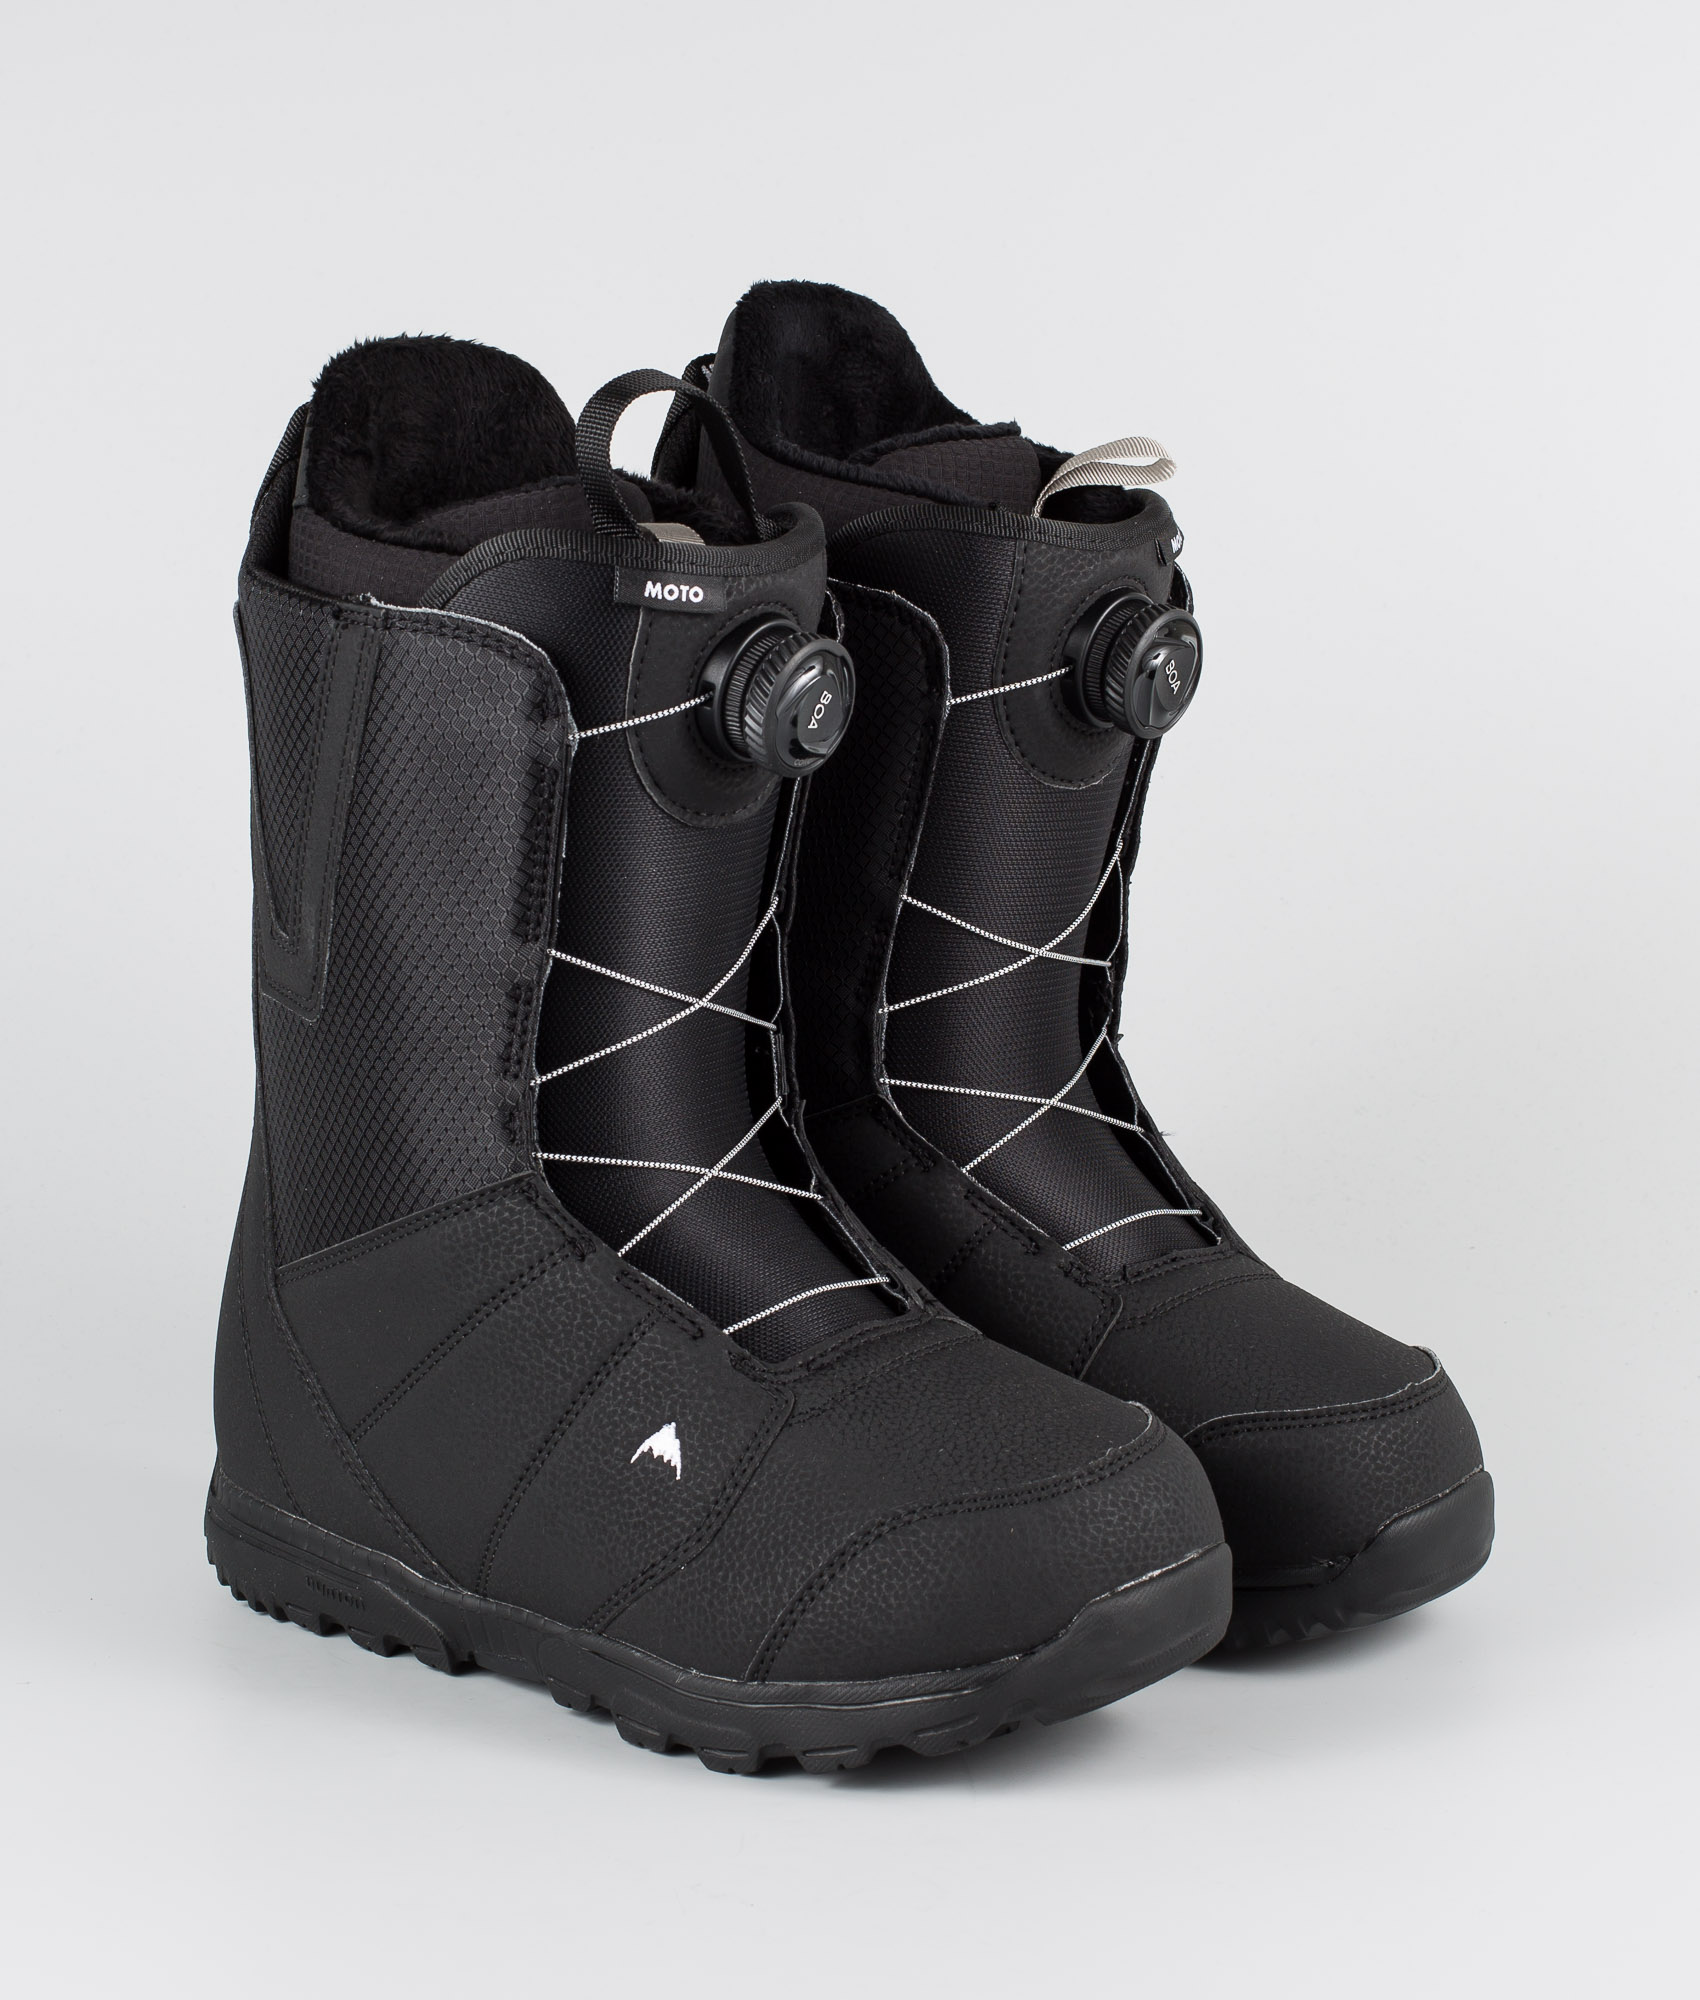 Burton Mens Moto Boa Snowboard Boots Black 13 Sports & Outdoors Boots